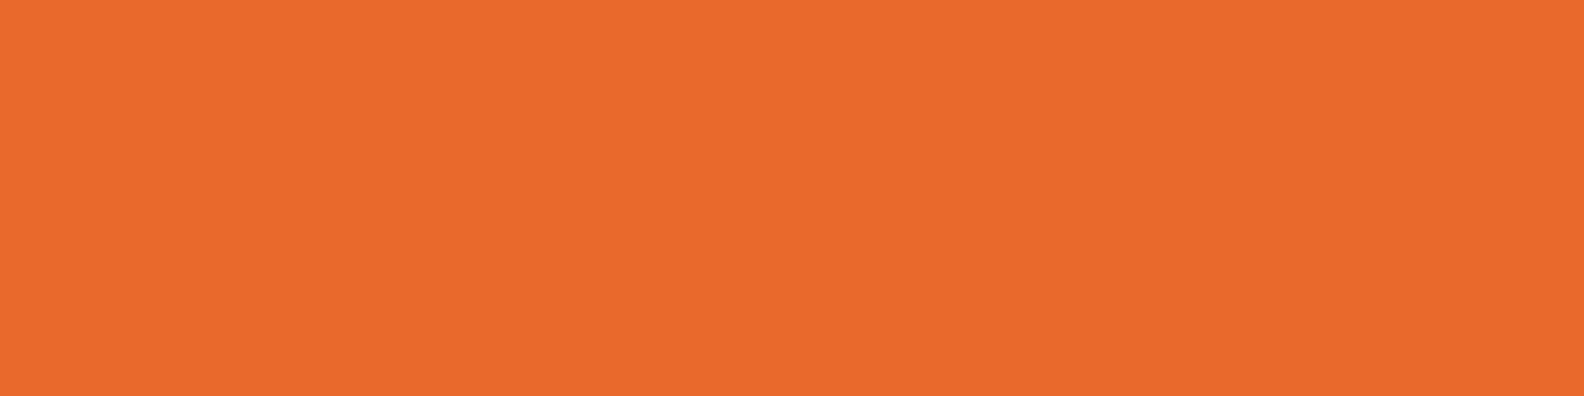 1584x396 Deep Carrot Orange Solid Color Background